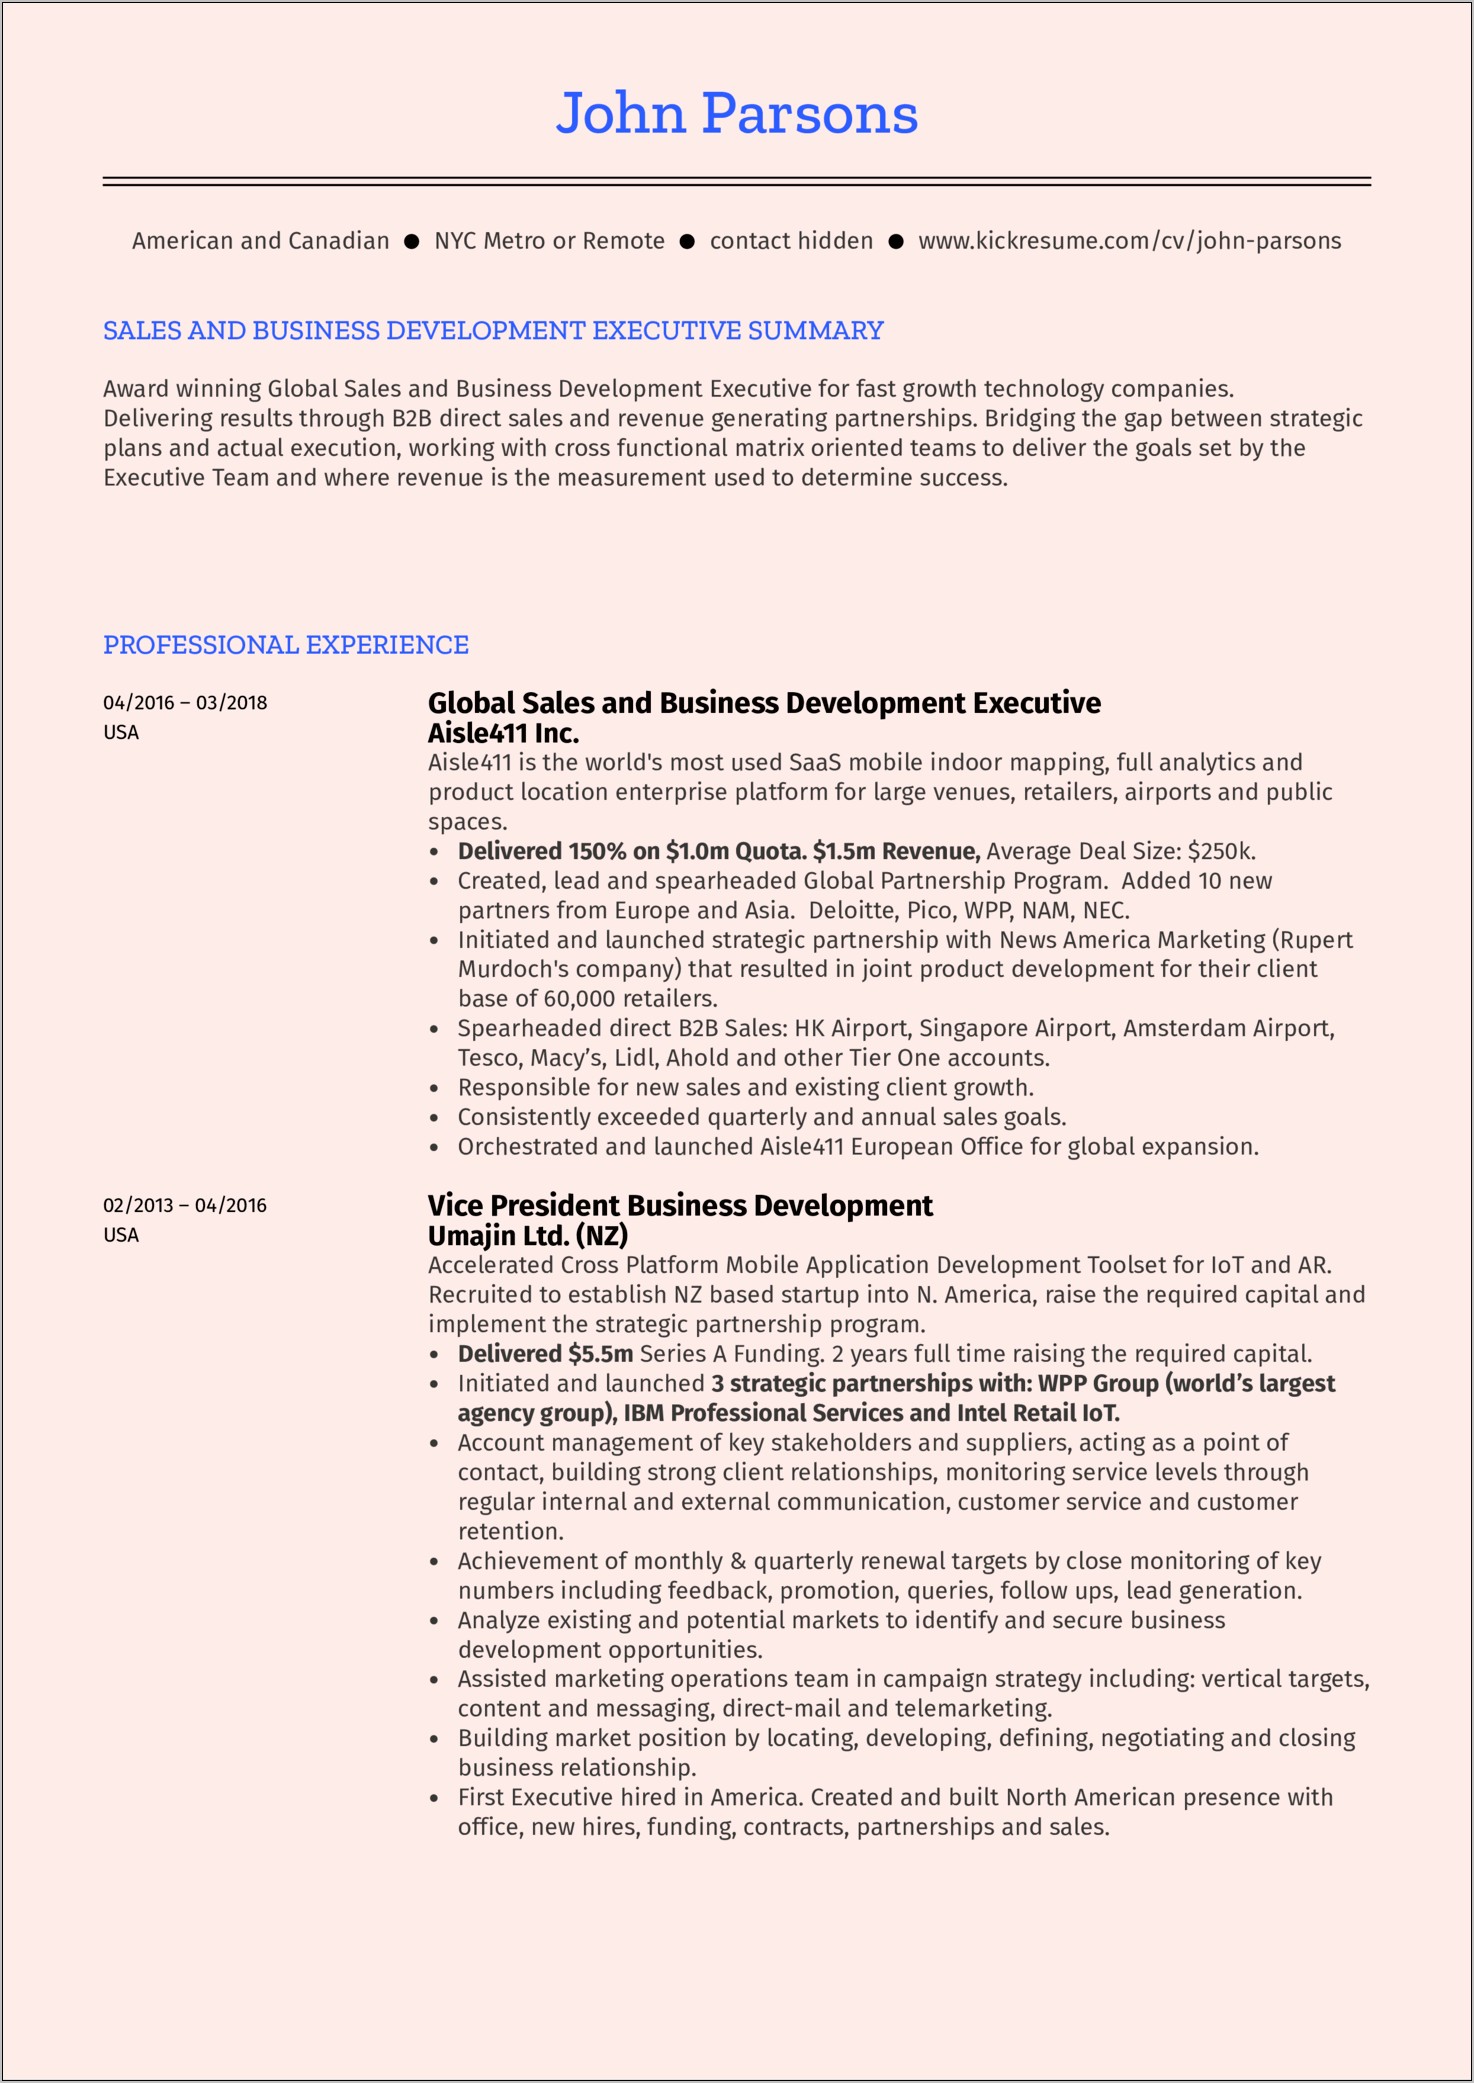 Business Development Representative Job Description Resume